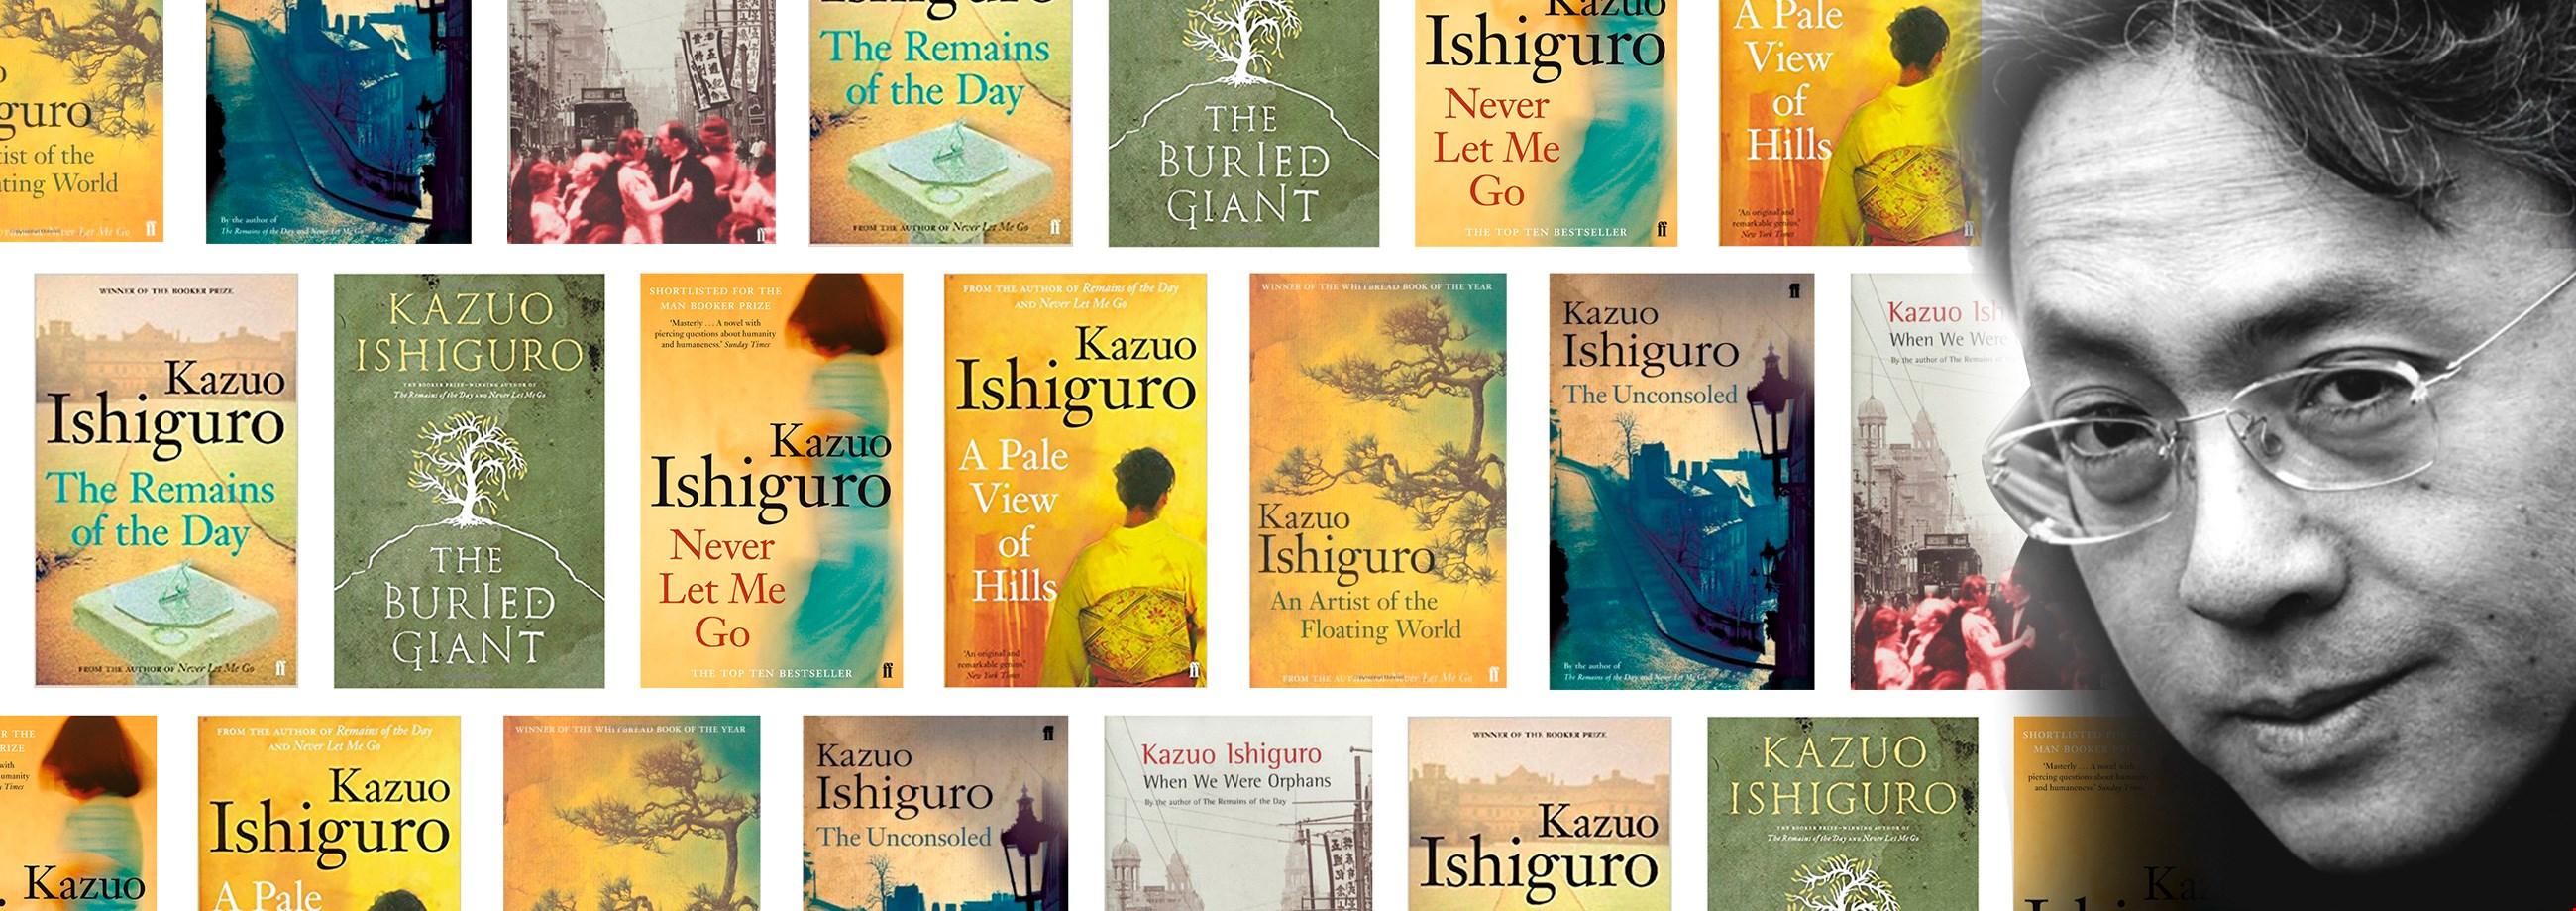 روايات كازو إيشيغورو